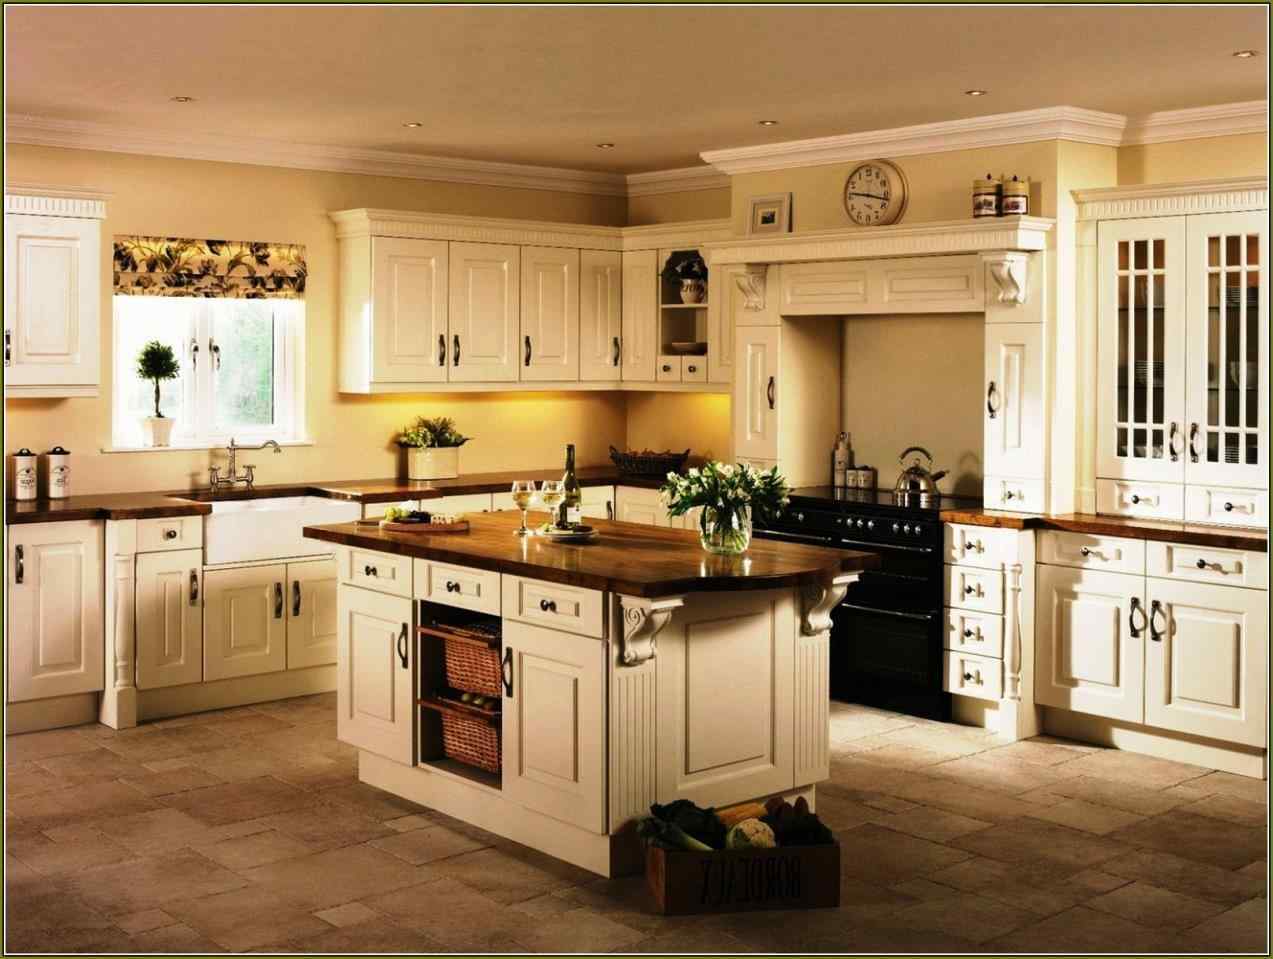 Wide, L-shaped kitchen